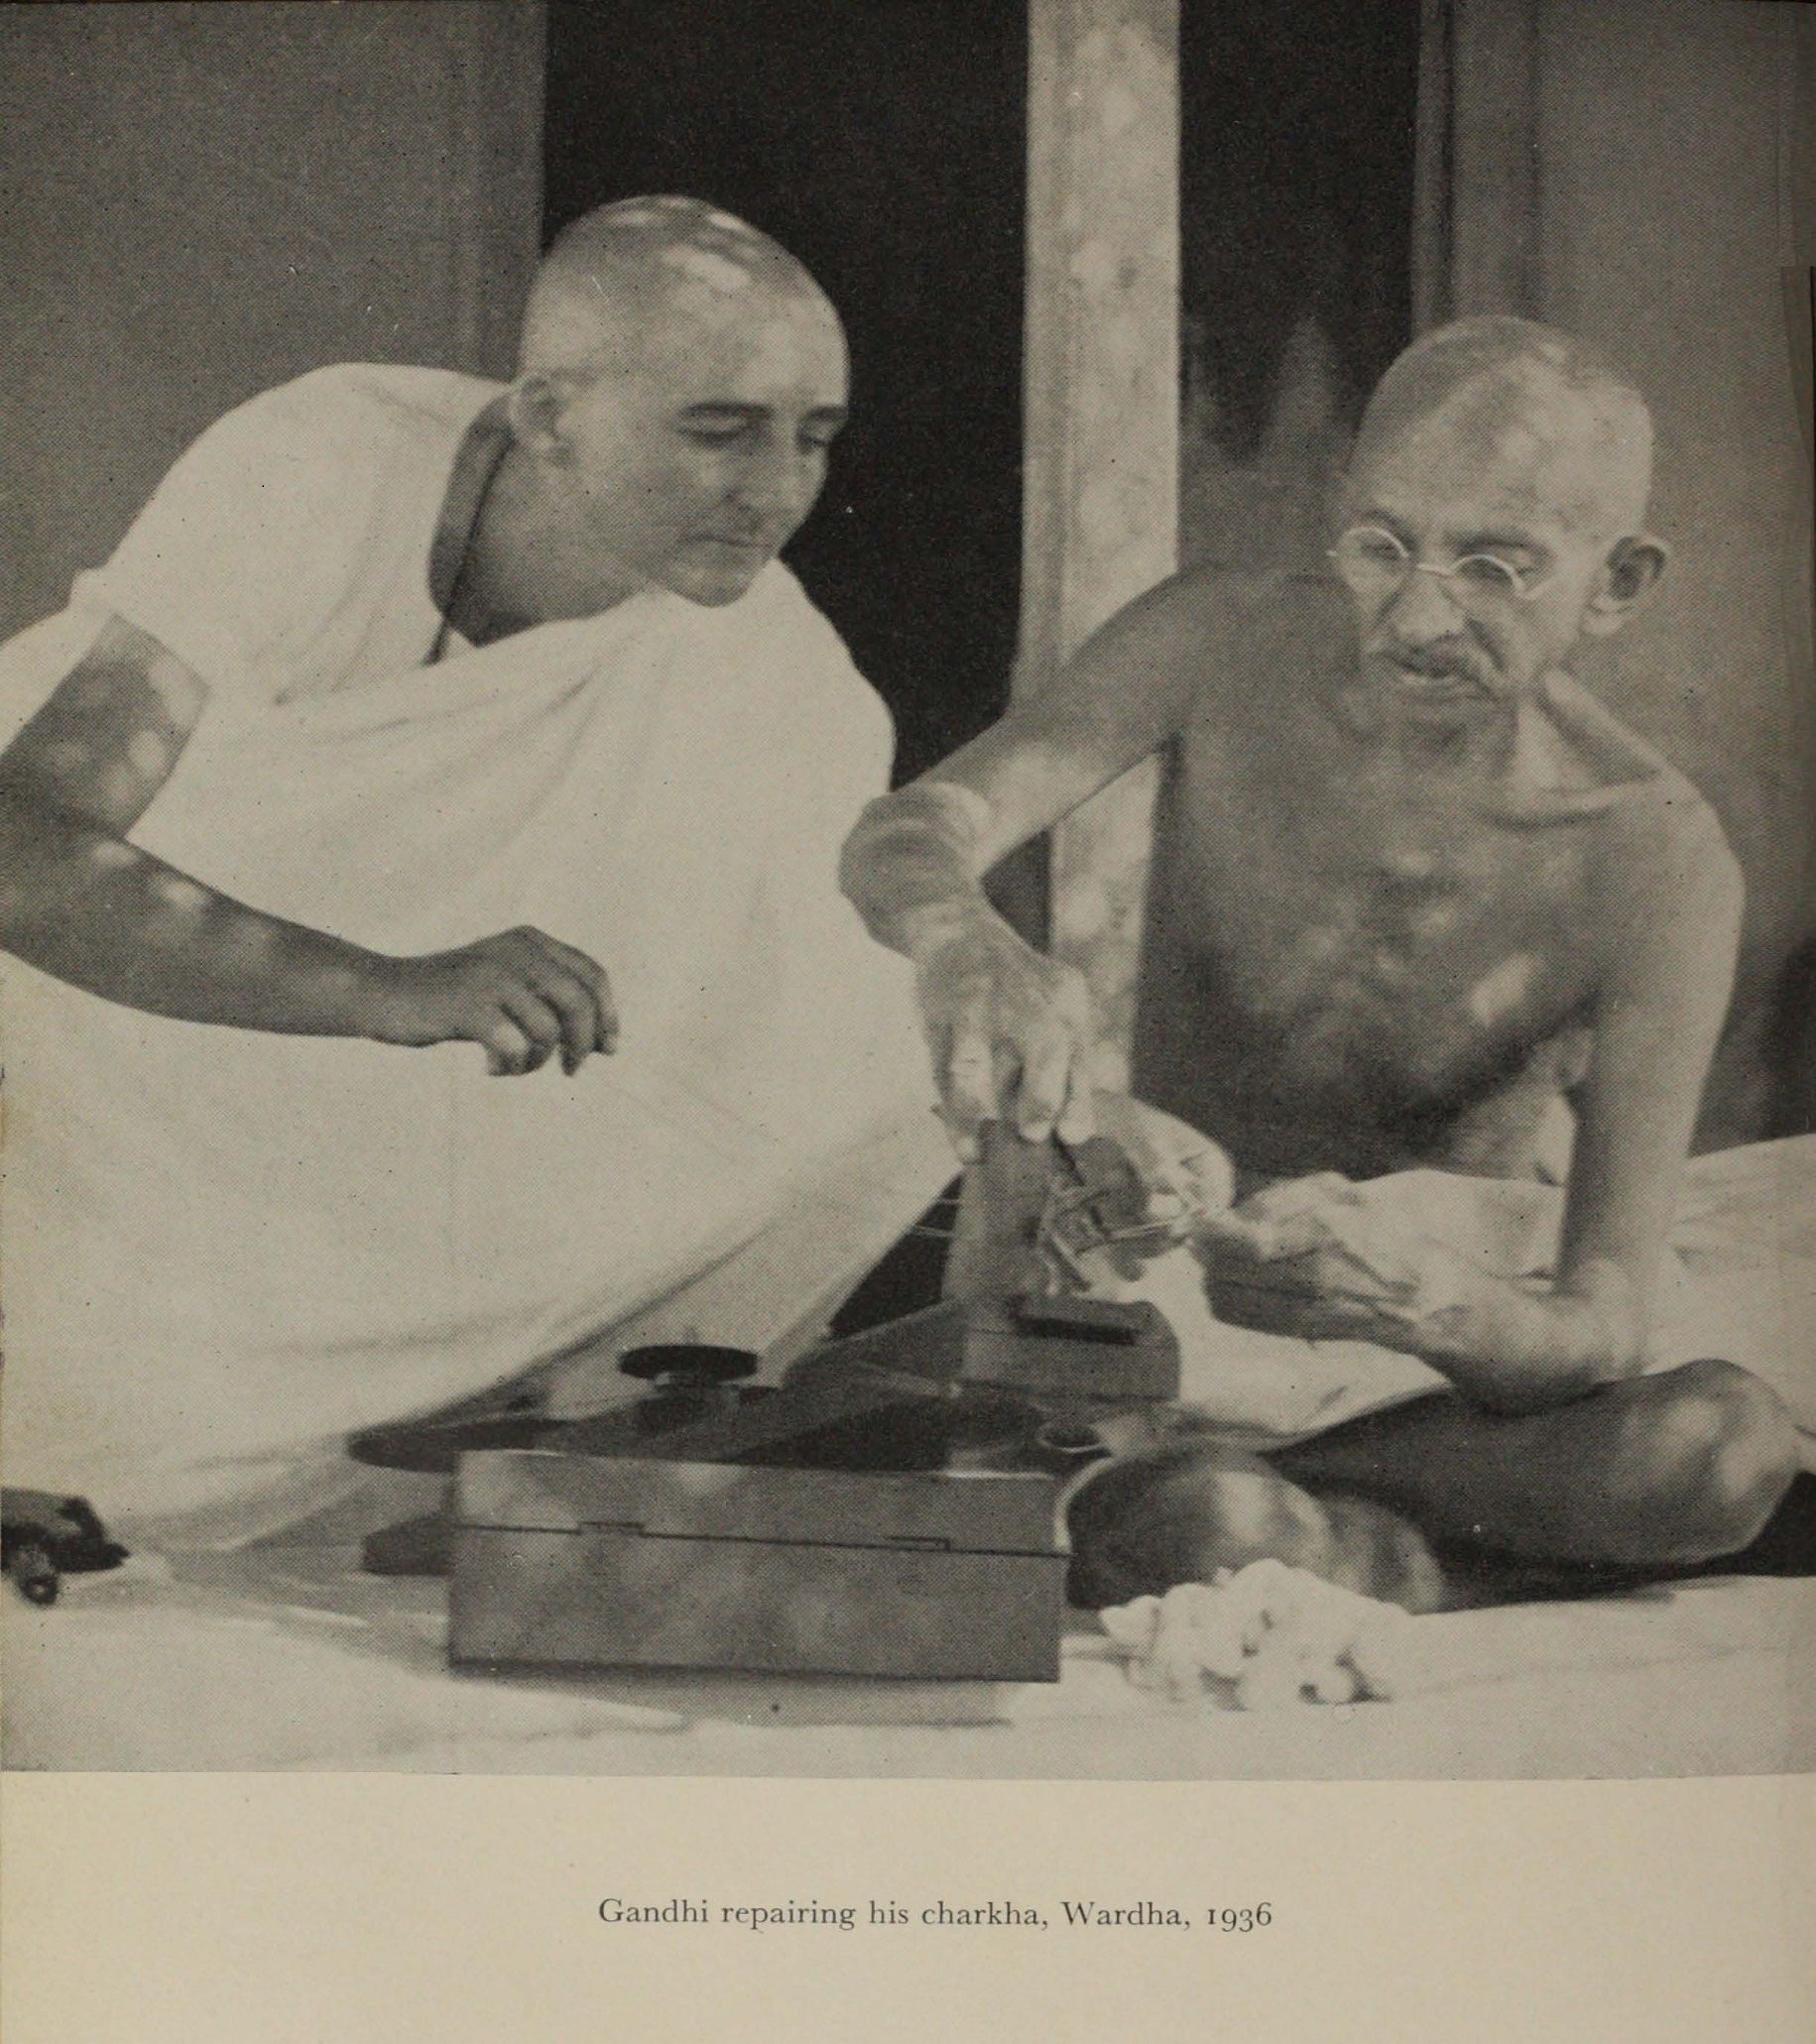 Mira Behn helping Gandhi repair his spinning wheel (Courtesy of the Sabarmati Ashram Archives)